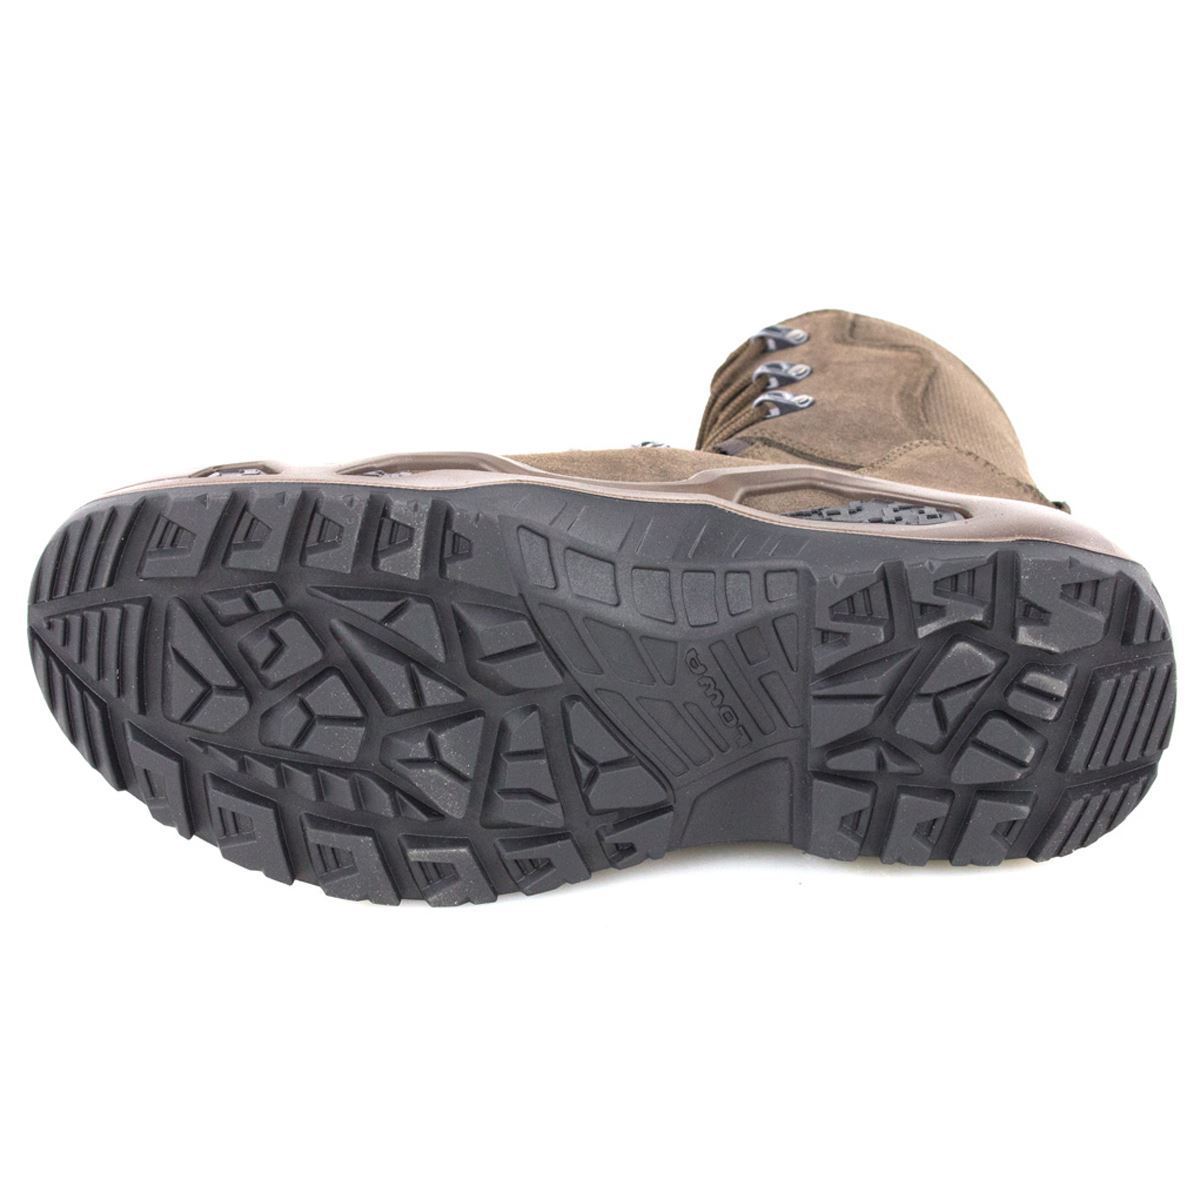 Lowa Z-8S GTX Waterproof Leather Men's Hiking Boots#color_dark brown